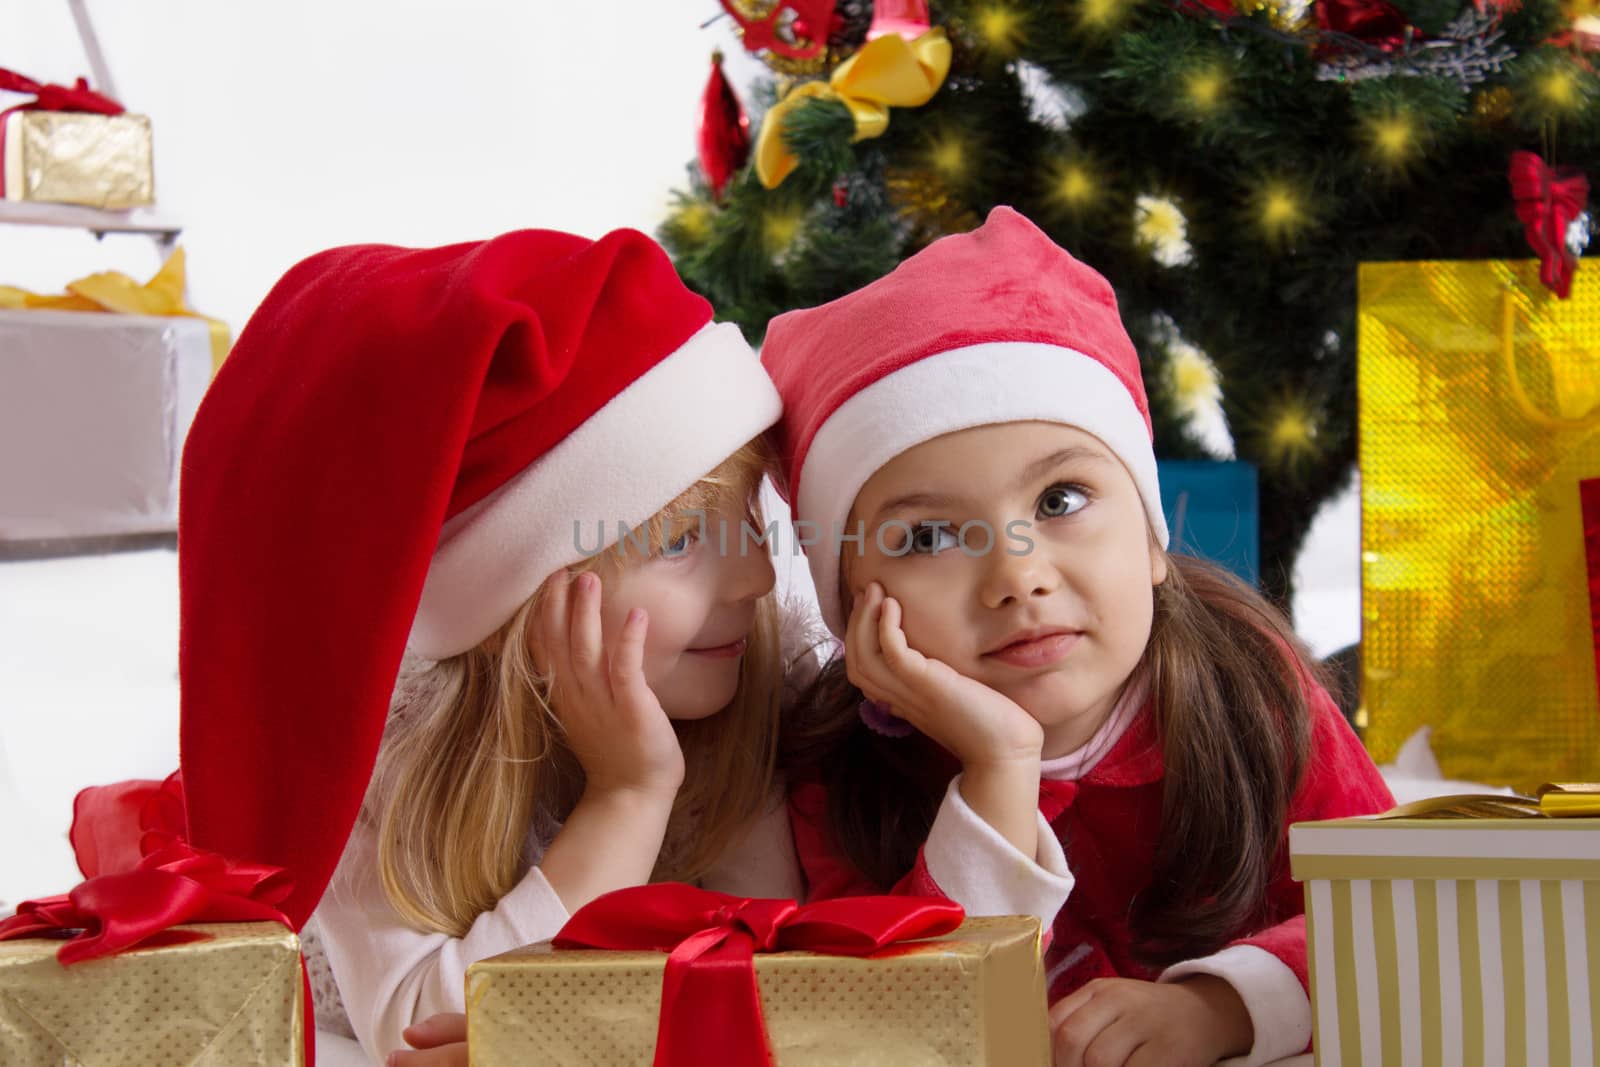 Girls in Santa hats sharing secrets under Christmas tree by Angel_a